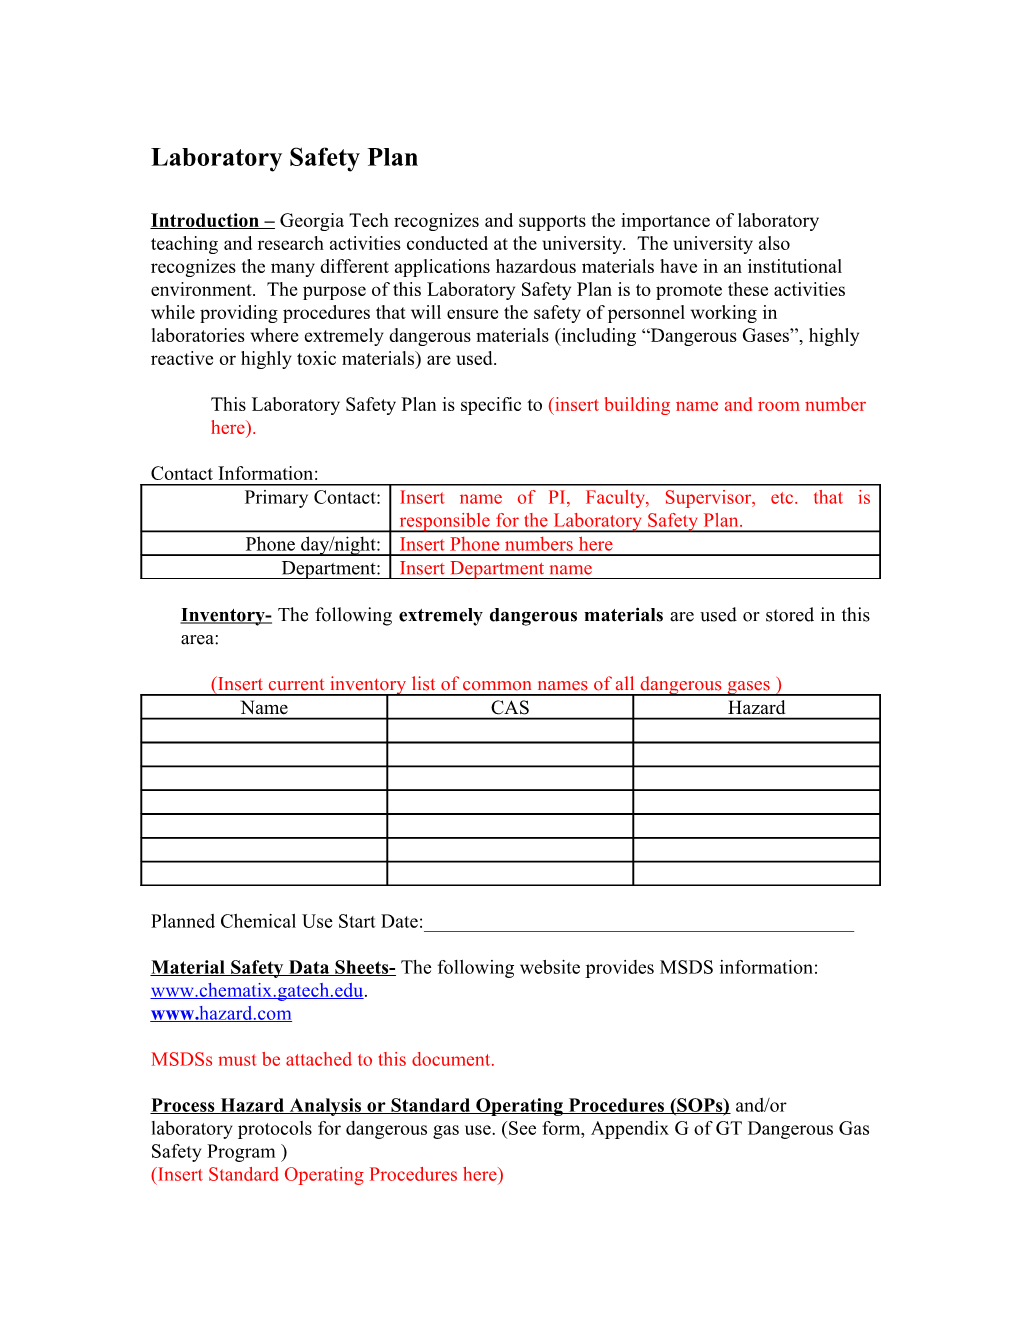 Appendix E: Laboratory Safety Plan